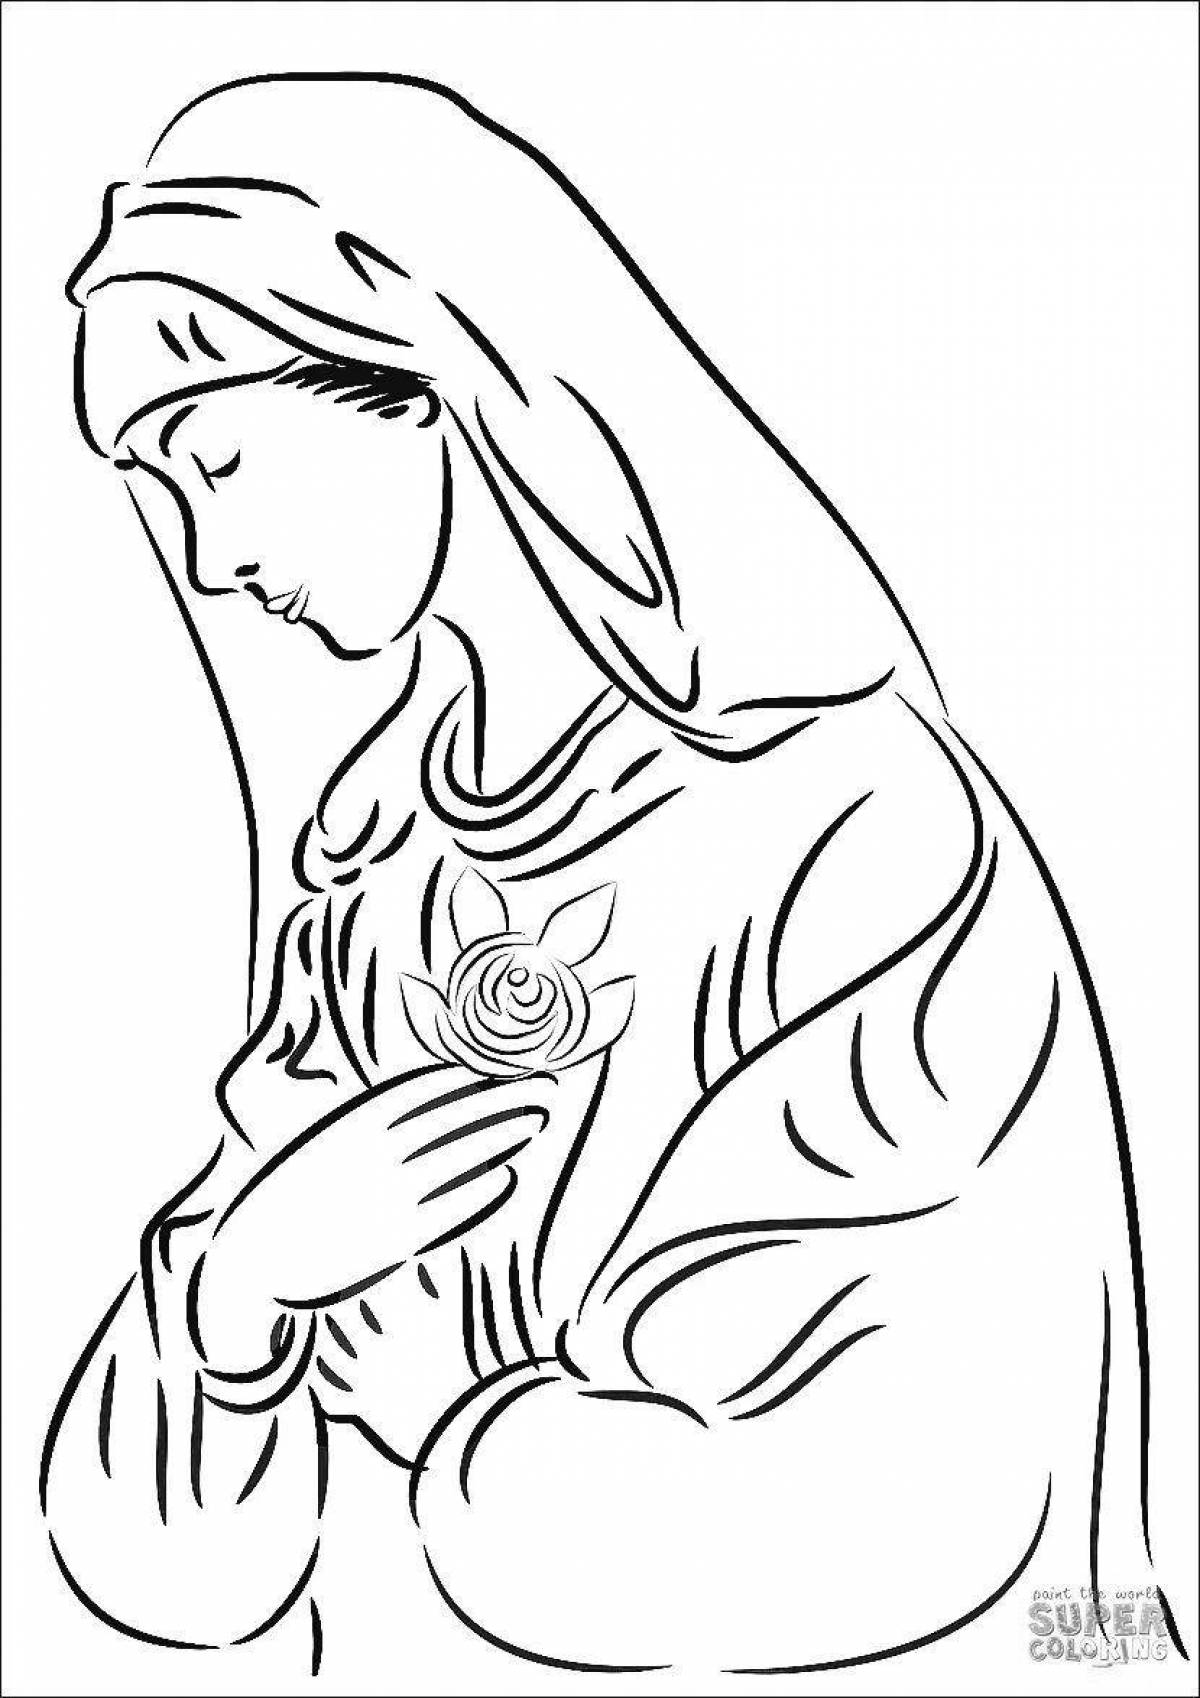 Virgin Mary #8